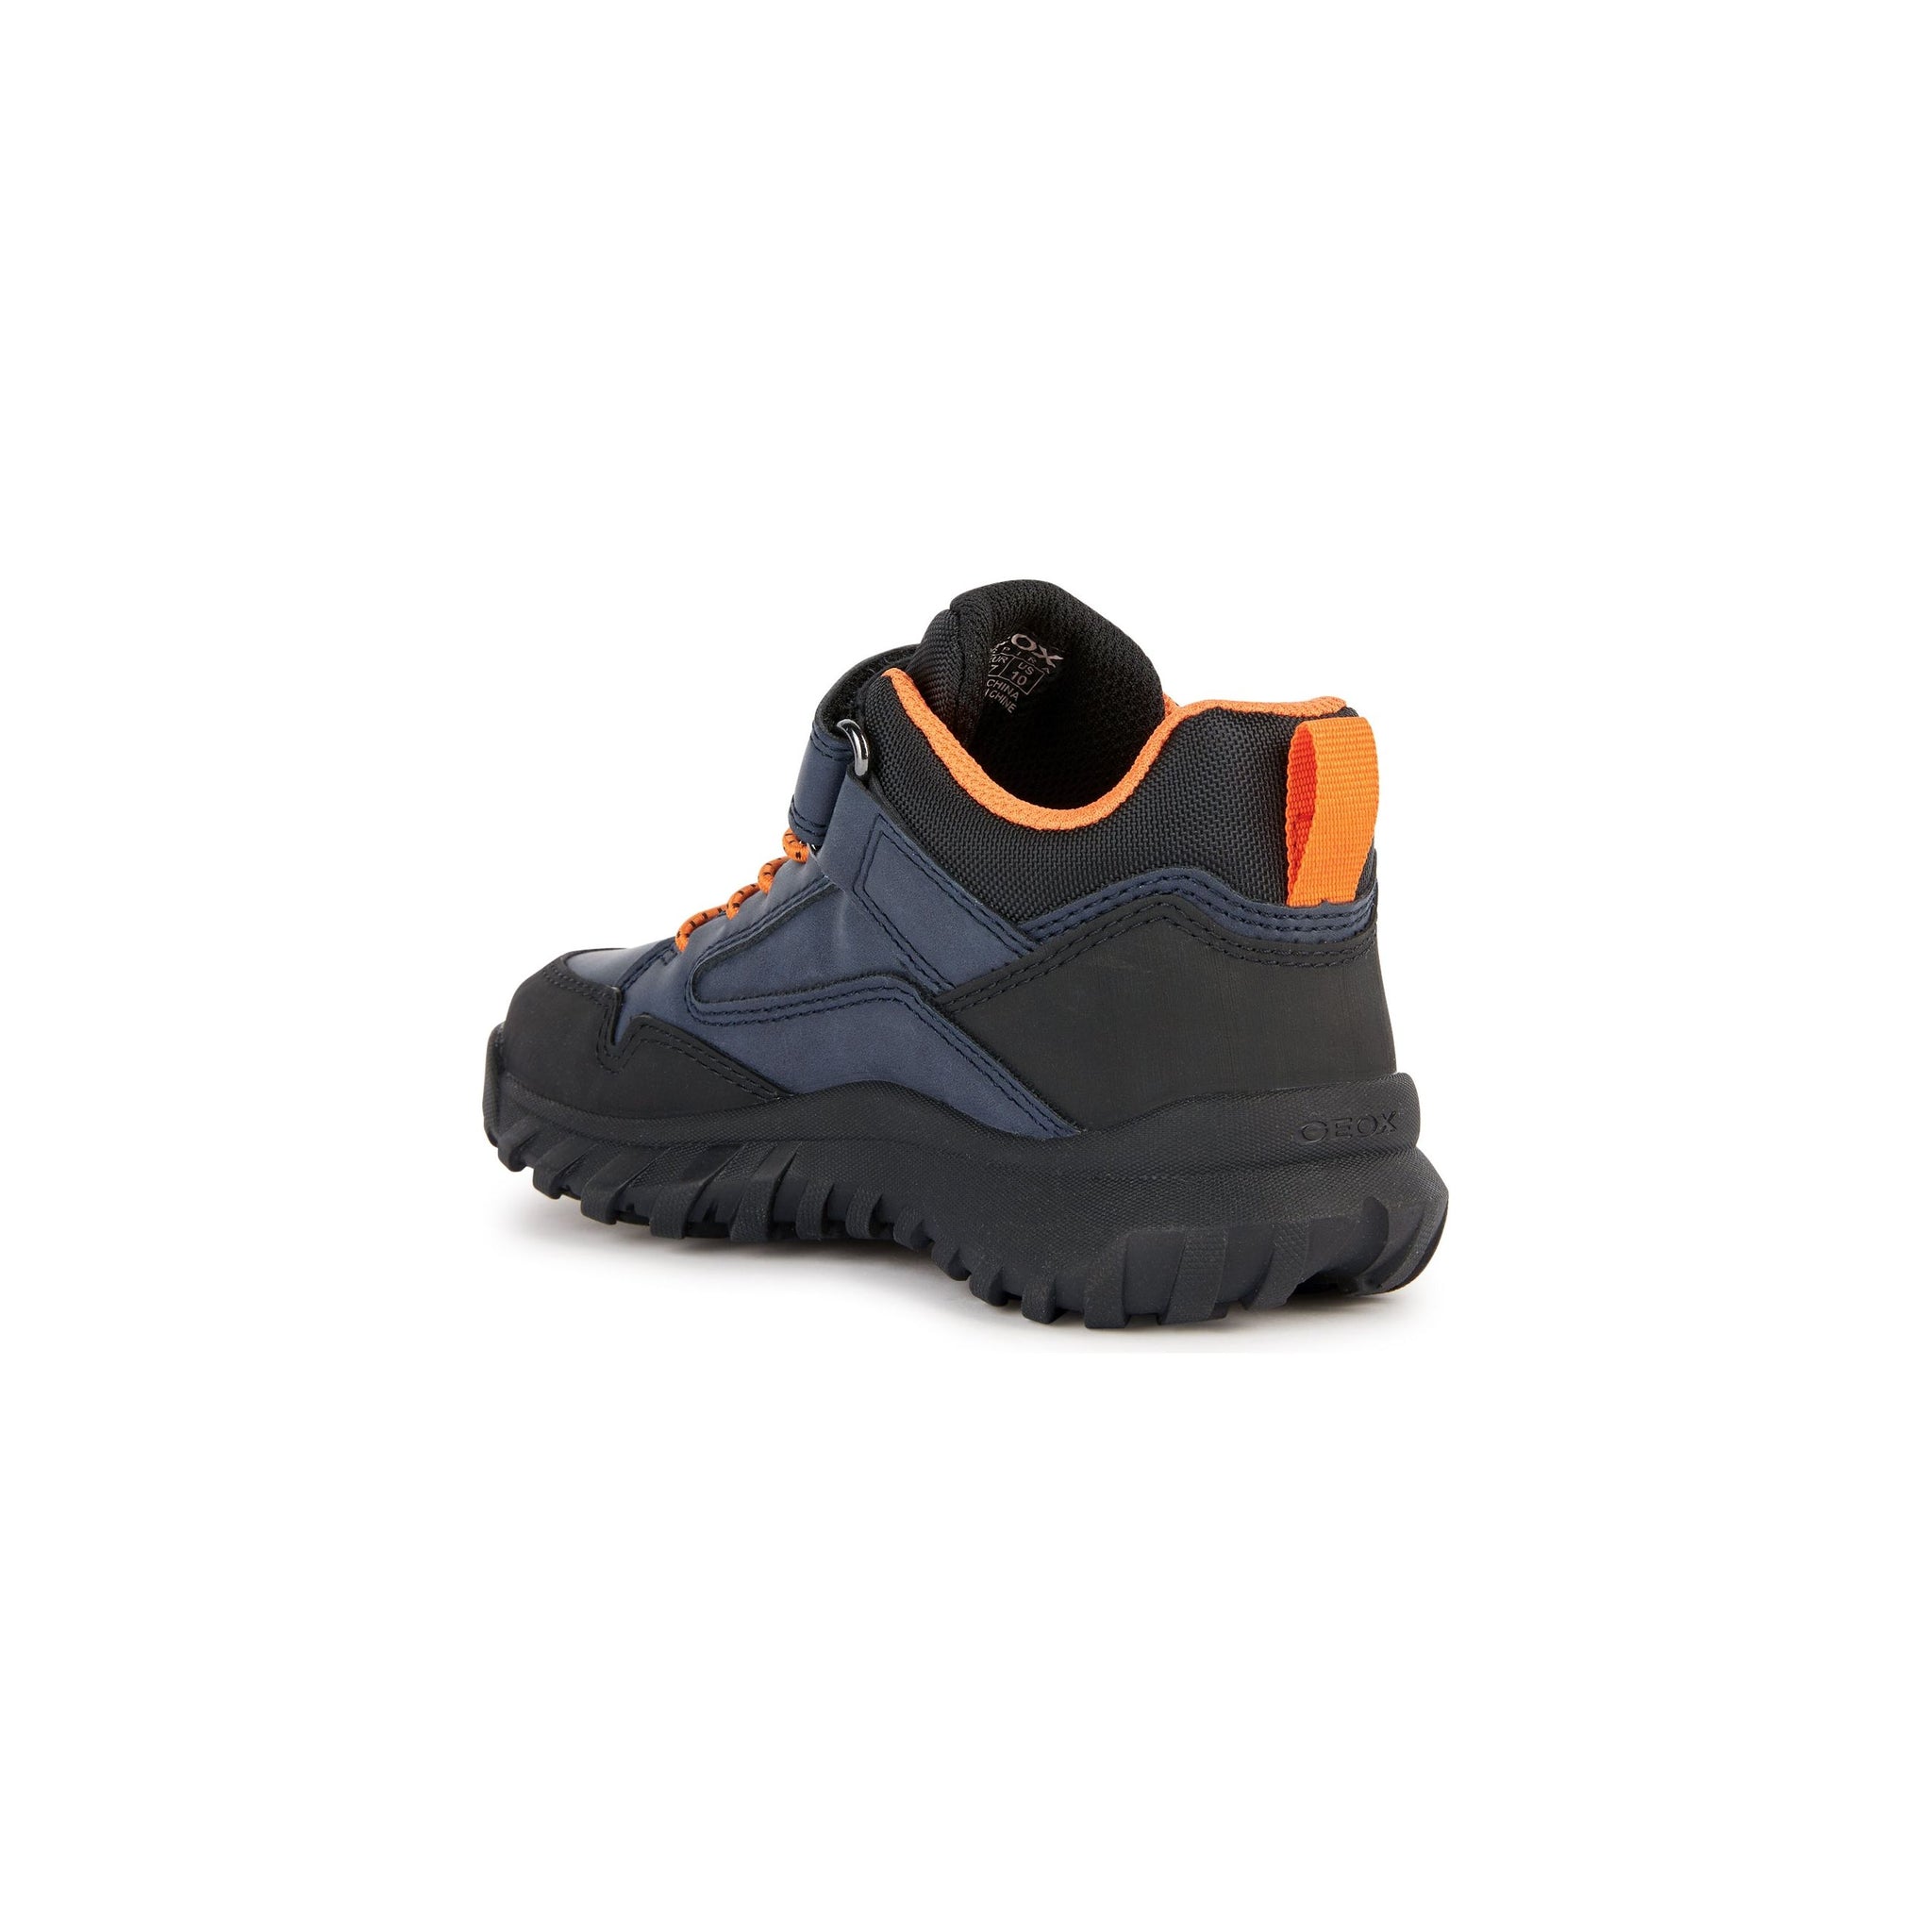 Geox Simbyos(J36L0C) - Boys Waterproof Velco Boot in Navy/Orange | Geox Shoes | Childrens Shoe Fitting | Wisemans | Bantry | West Cork | Ireland